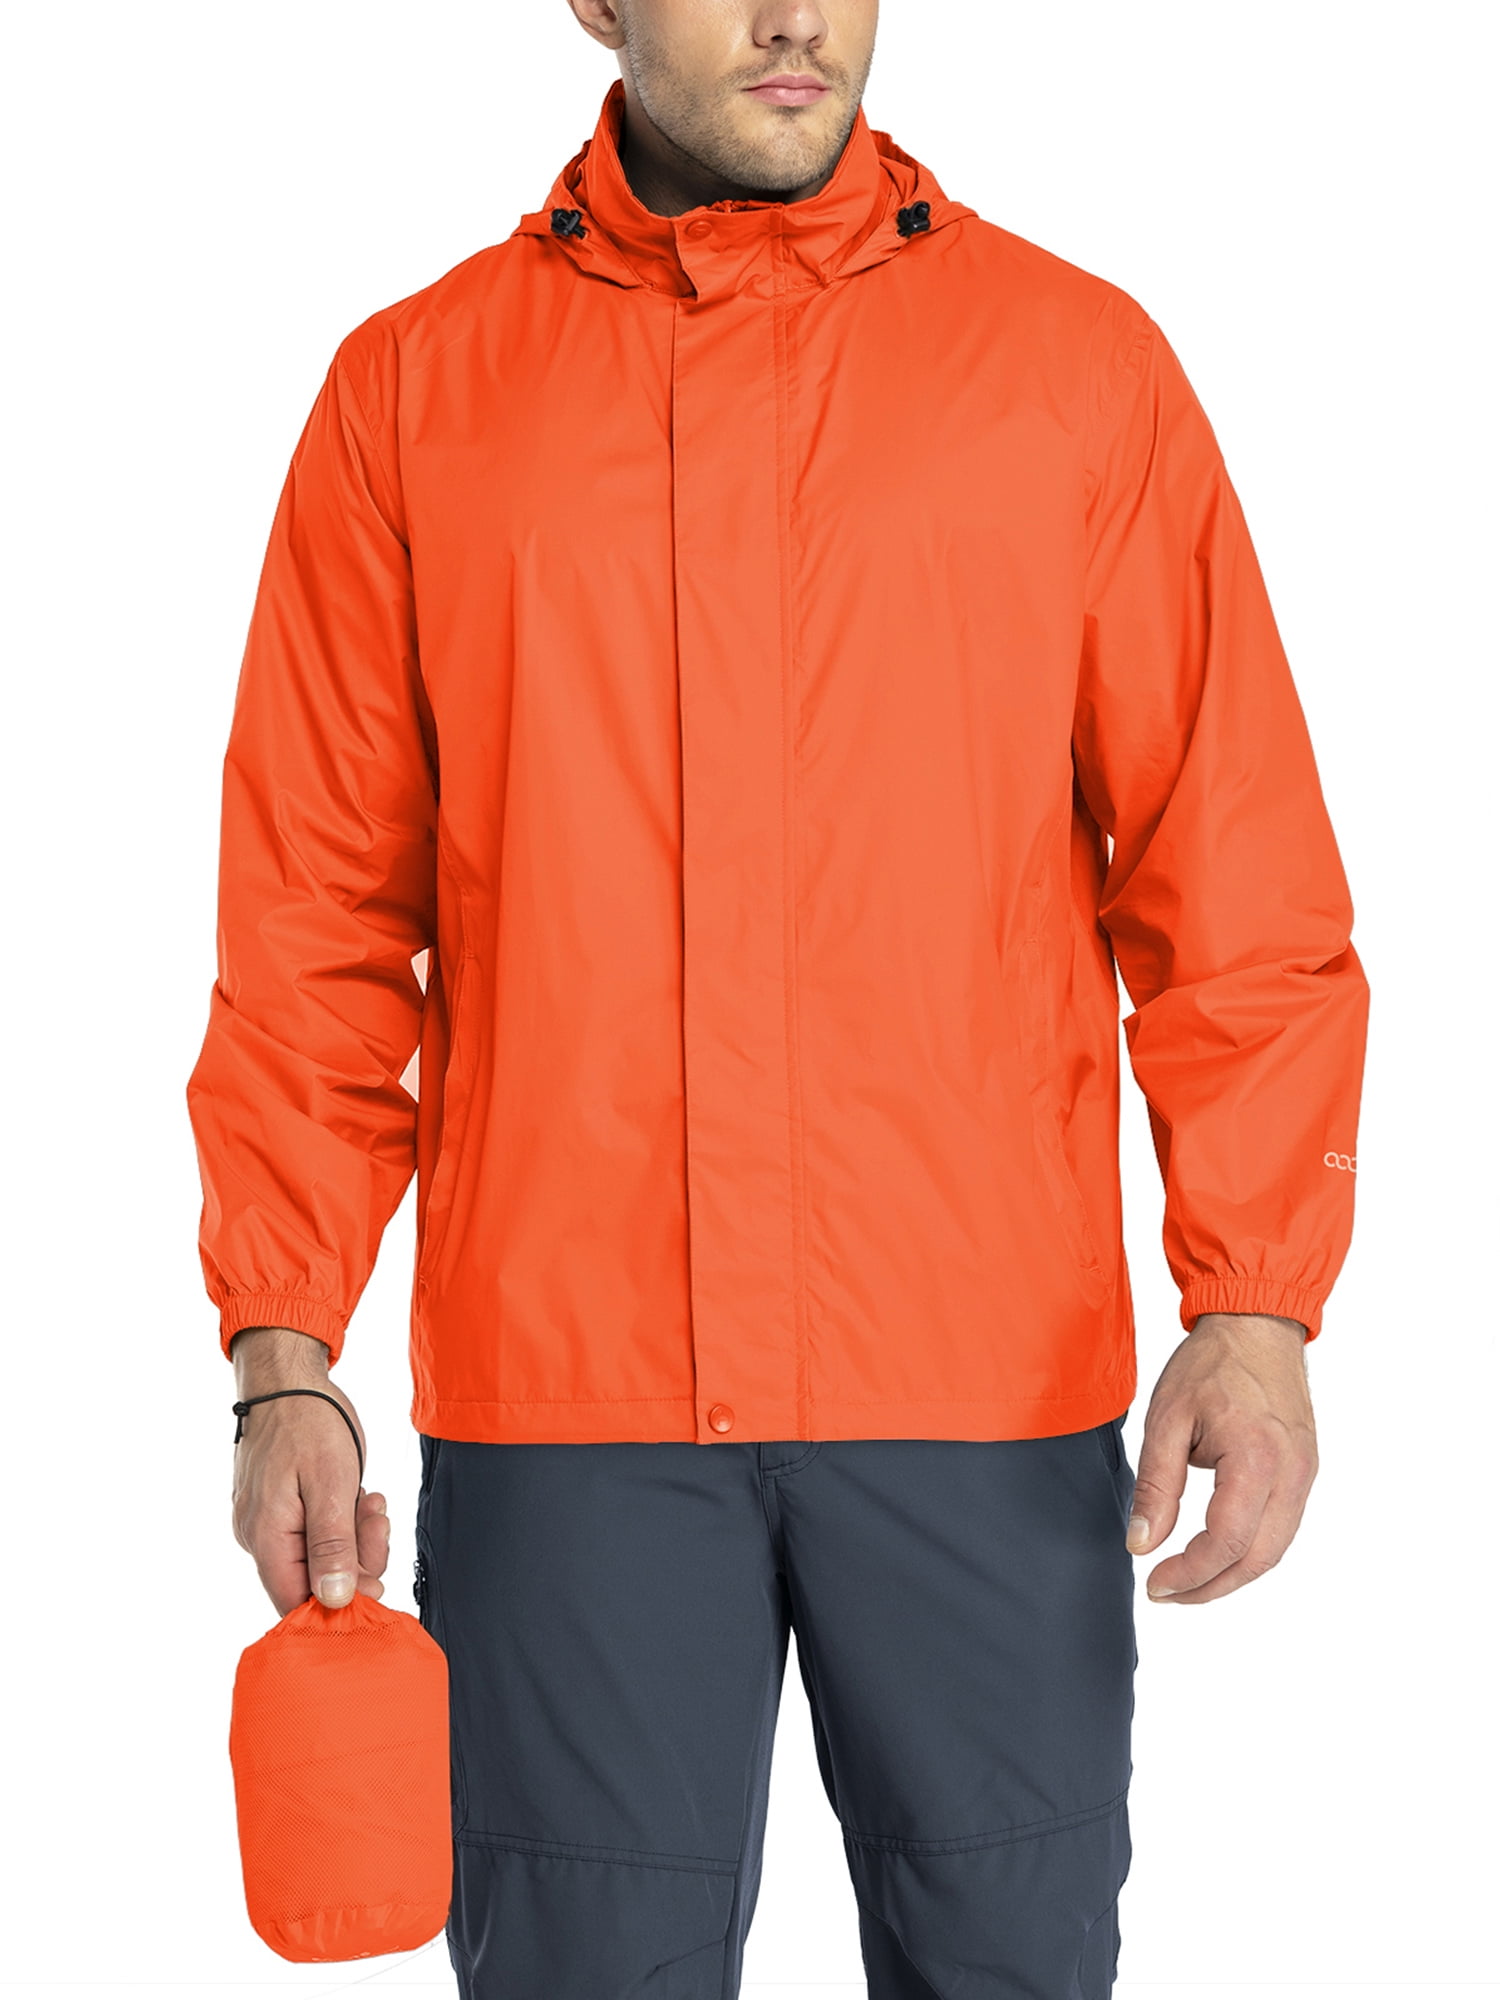  XYLZ Camping Rain Jacket Men Women Waterproof Clothing Fishing  Clothes Quick Dry Skin Windbreaker with Pocket (Color : Unisex-Orange, Size  : 4X-Large) : Everything Else